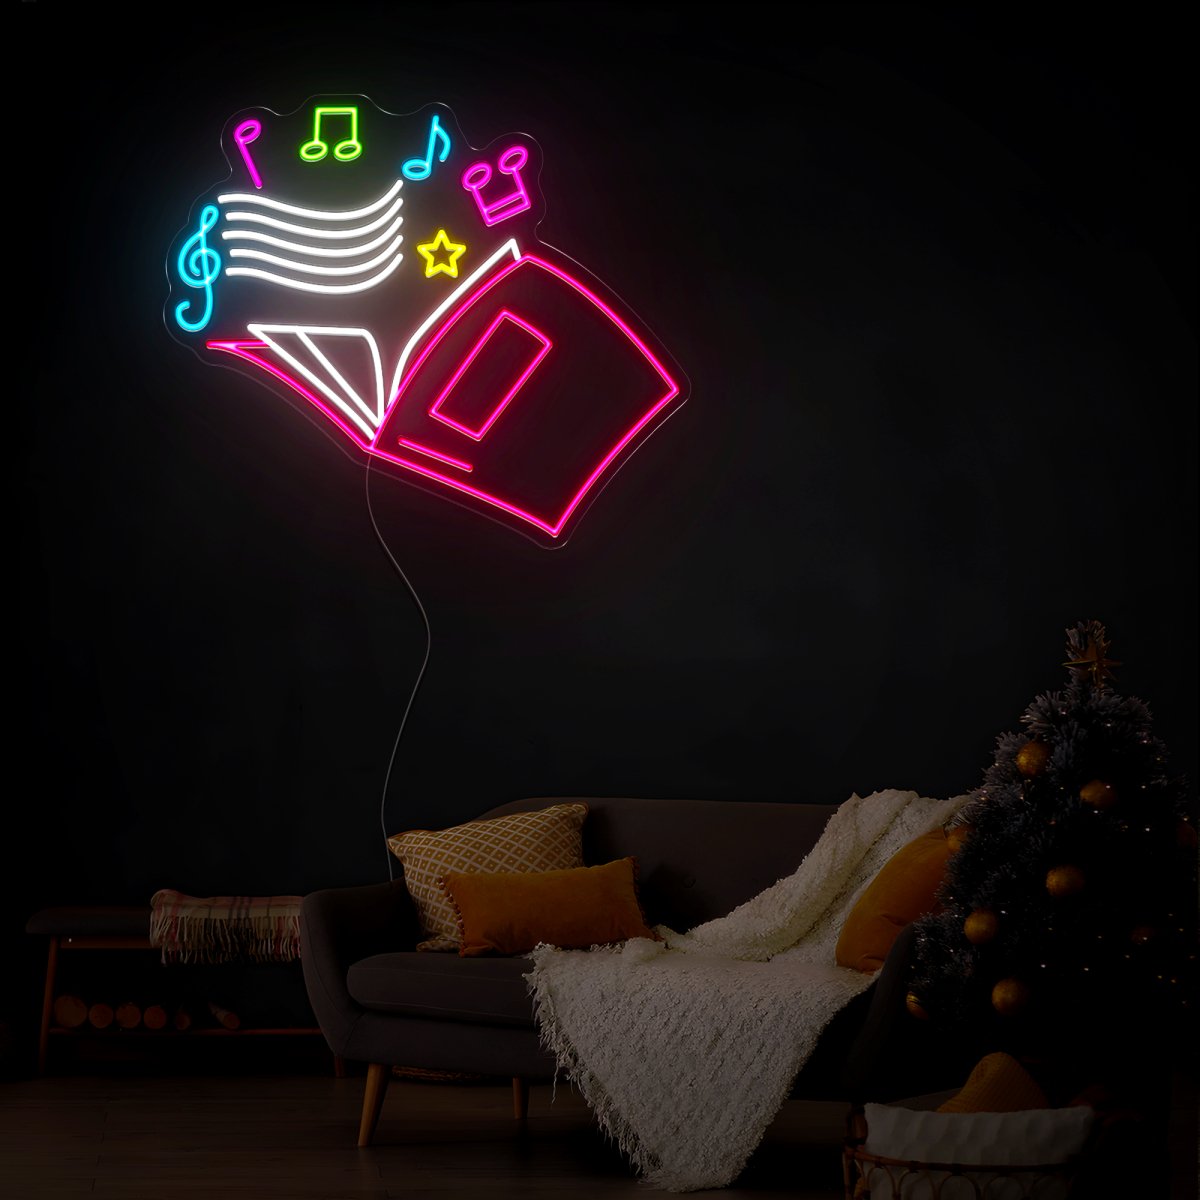 Music Book Led Neon Sign - Reels Custom